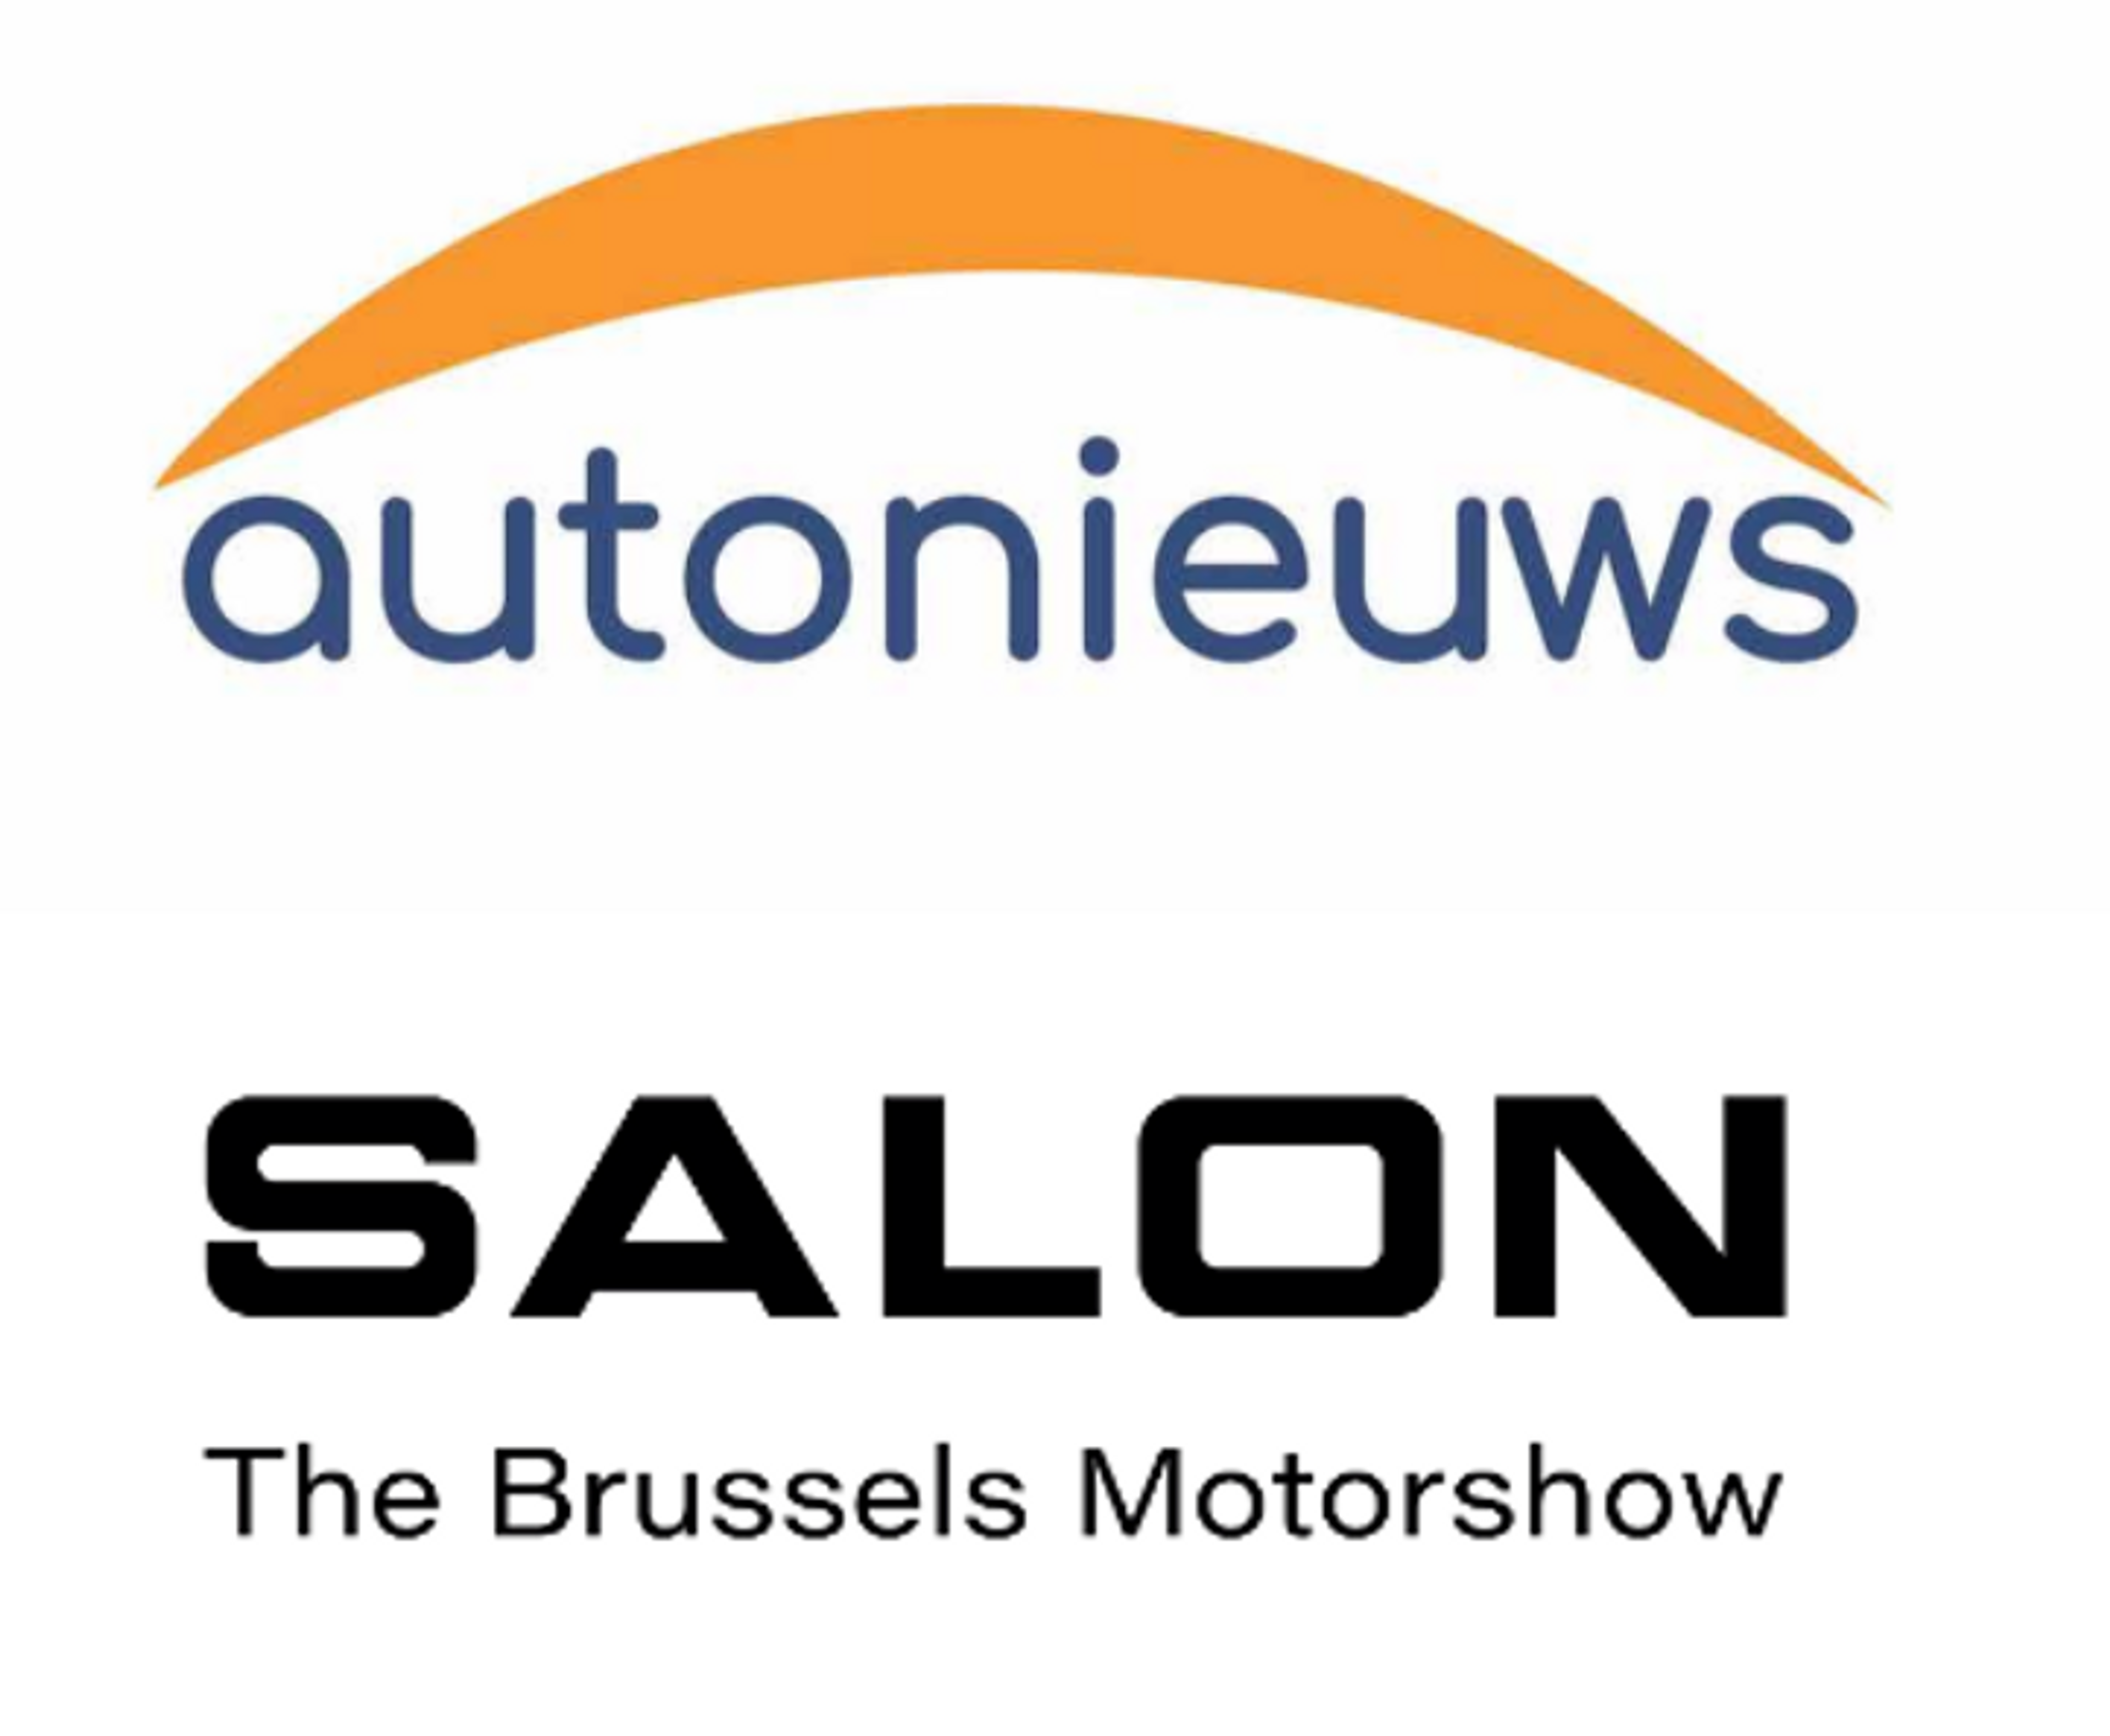 salon the brussels motorshow bms23